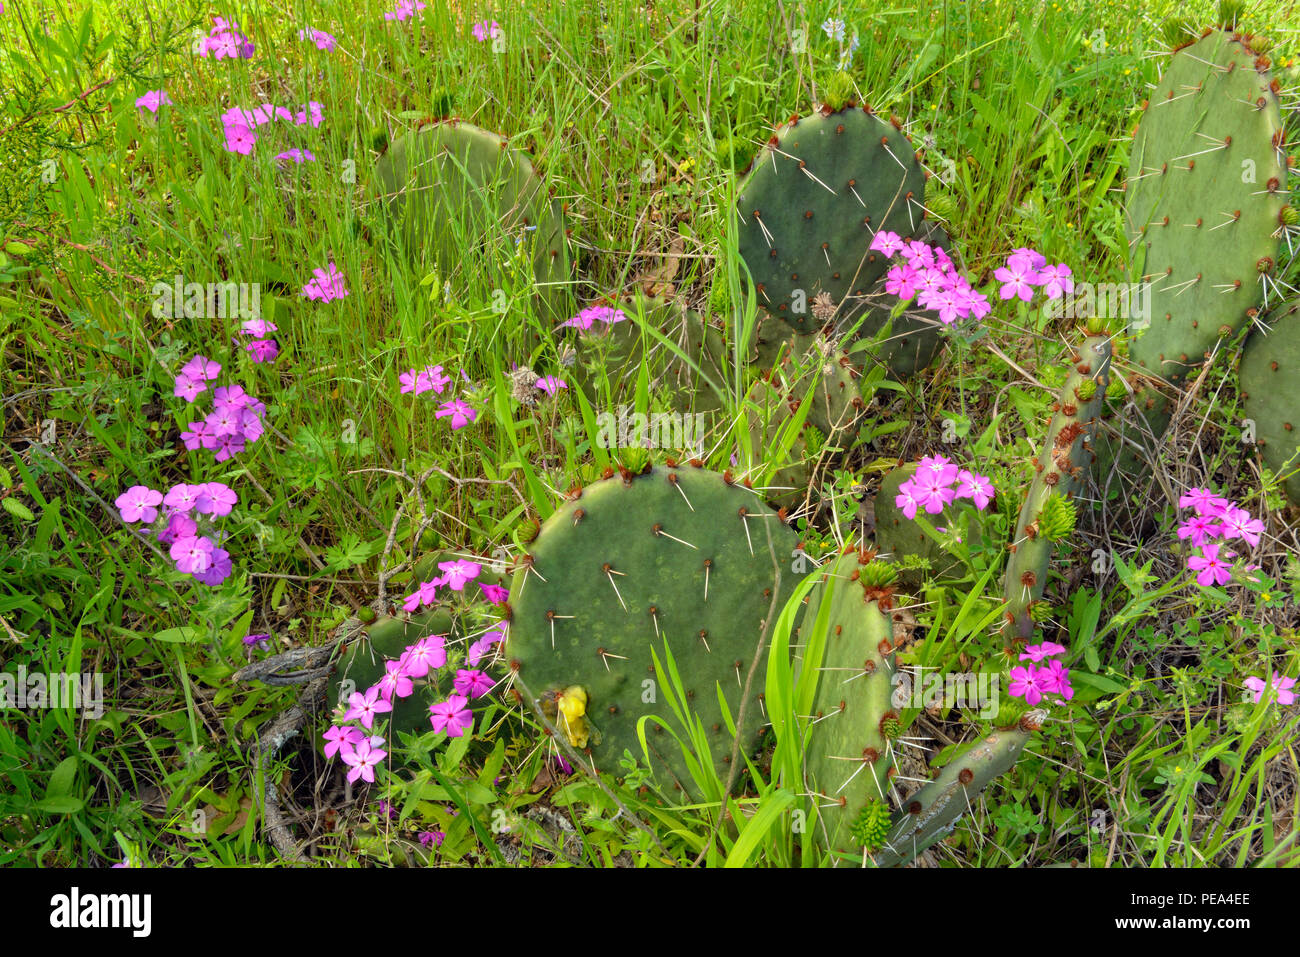 Wild Phlox (Phlox spp.) and prickly pear cactus (Opuntia spp.), Turkey Bend LCRA, Texas, USA Stock Photo